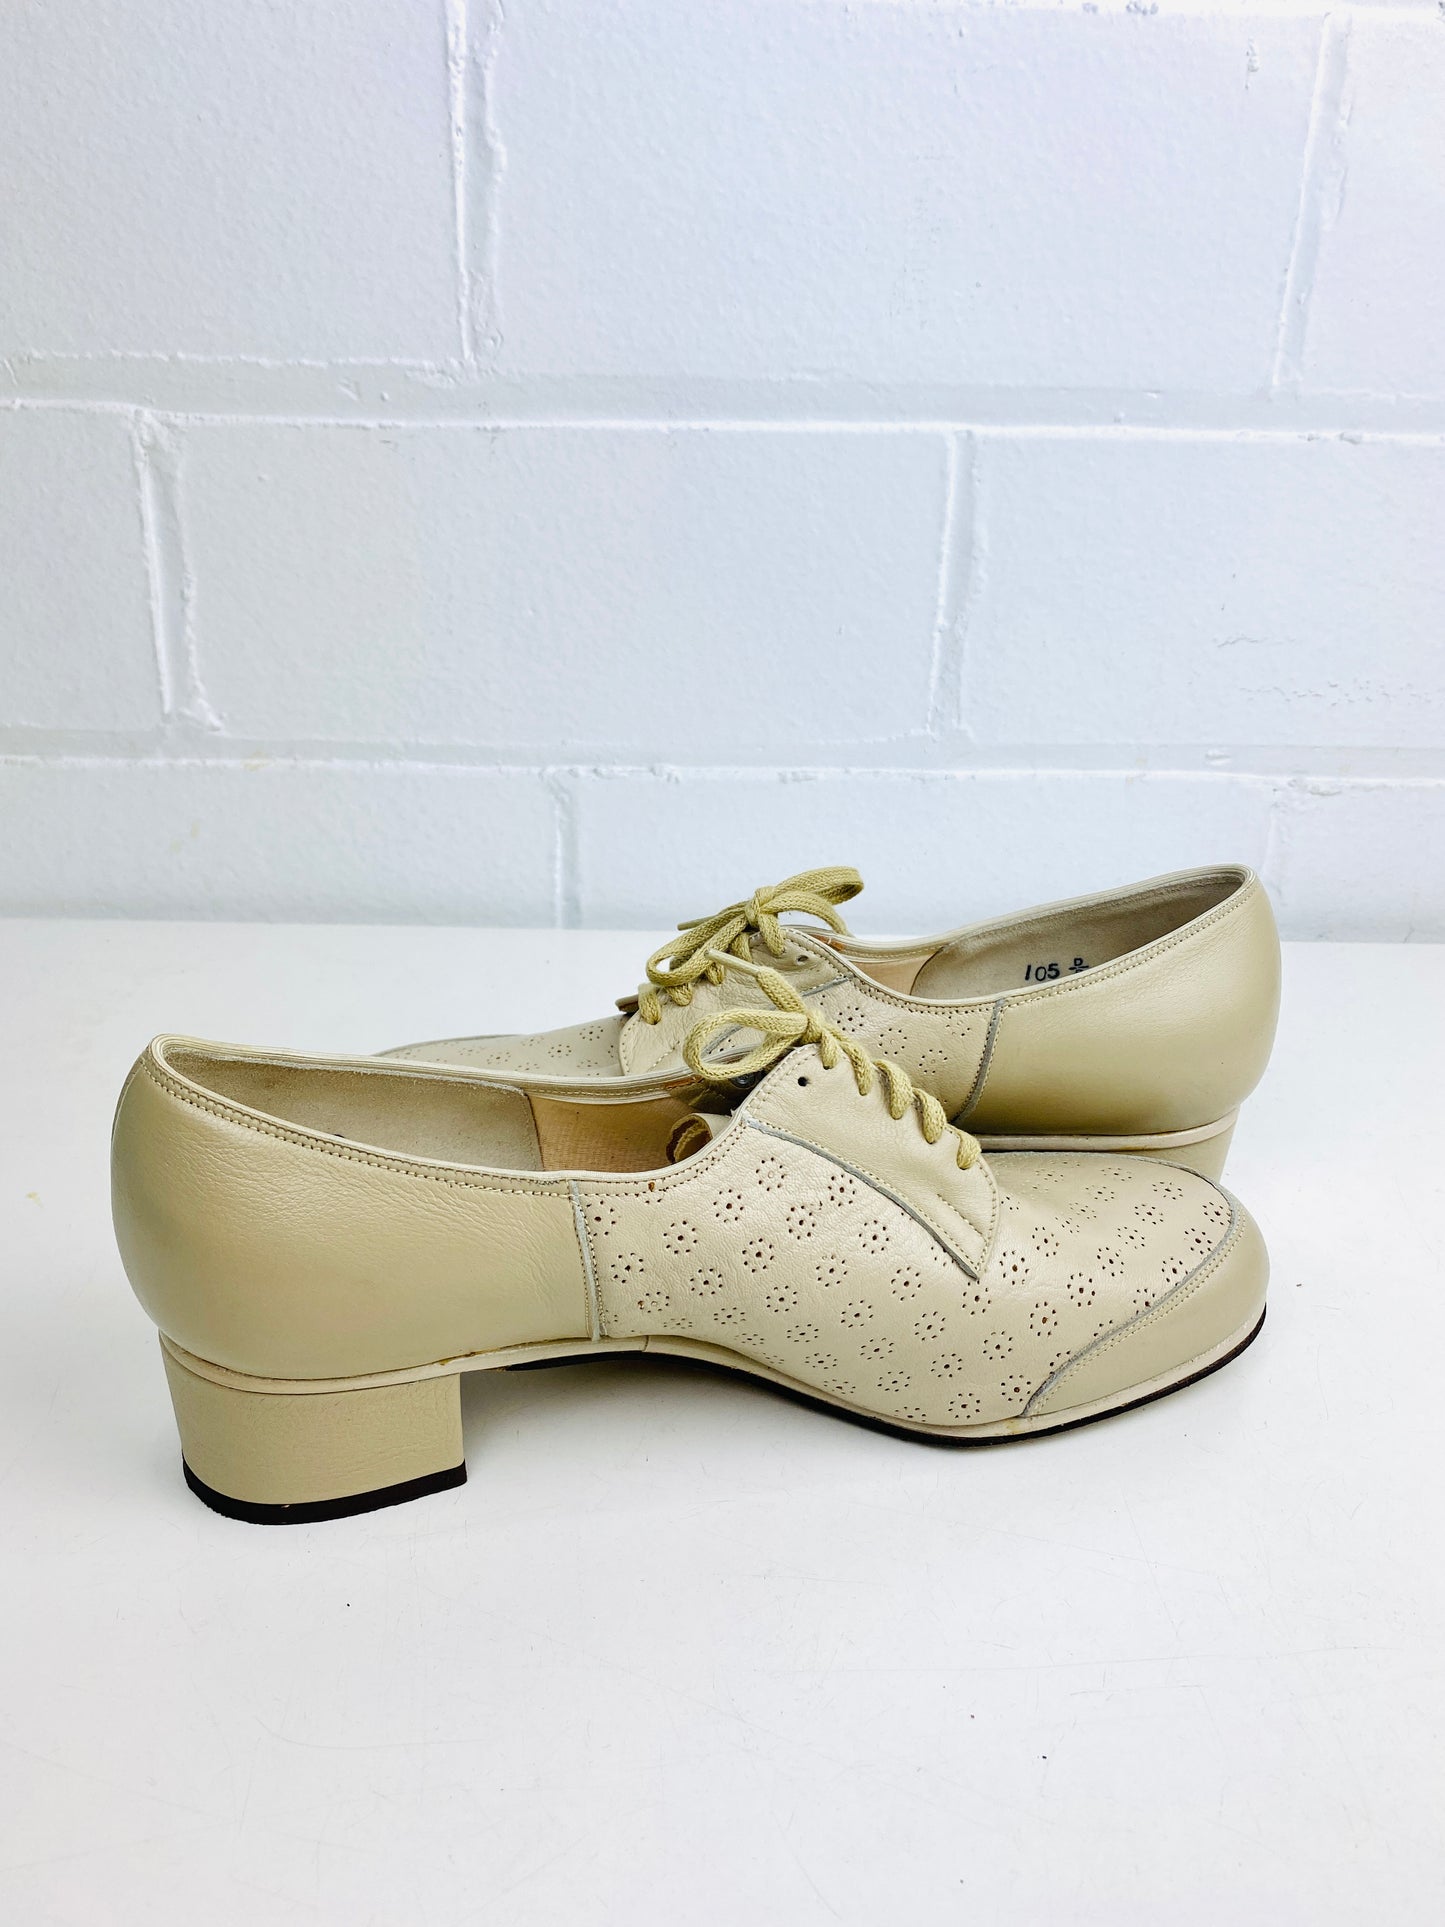 Vintage Deadstock Shoes, Women's 1980s Beige Leather Cuban Heel Oxfords, NOS, 1616